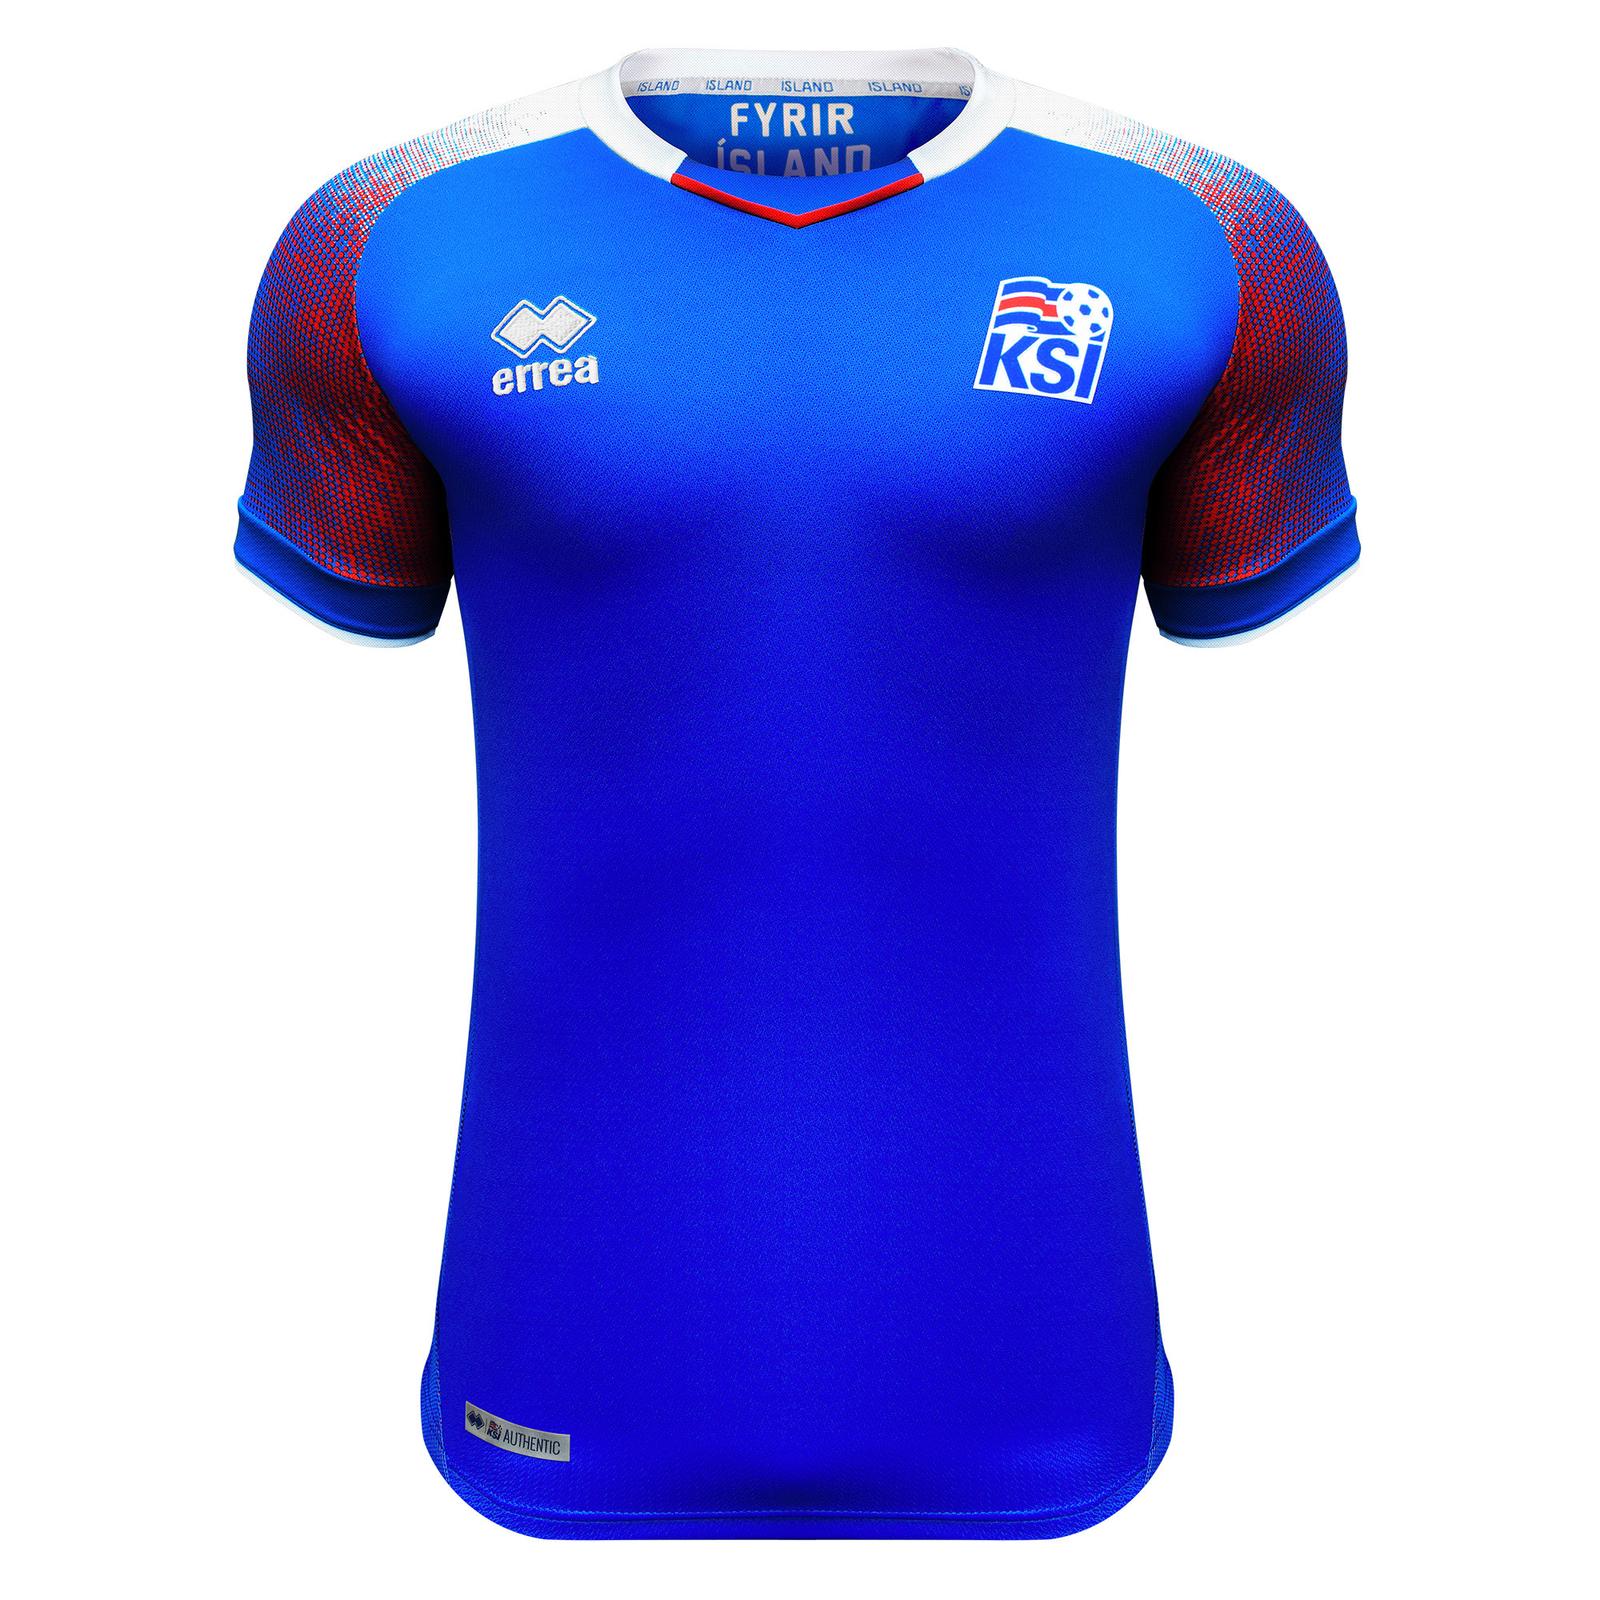 Iceland Sport Gear,Iceland Soccer Uniforms,Iceland Soccer Jerseys